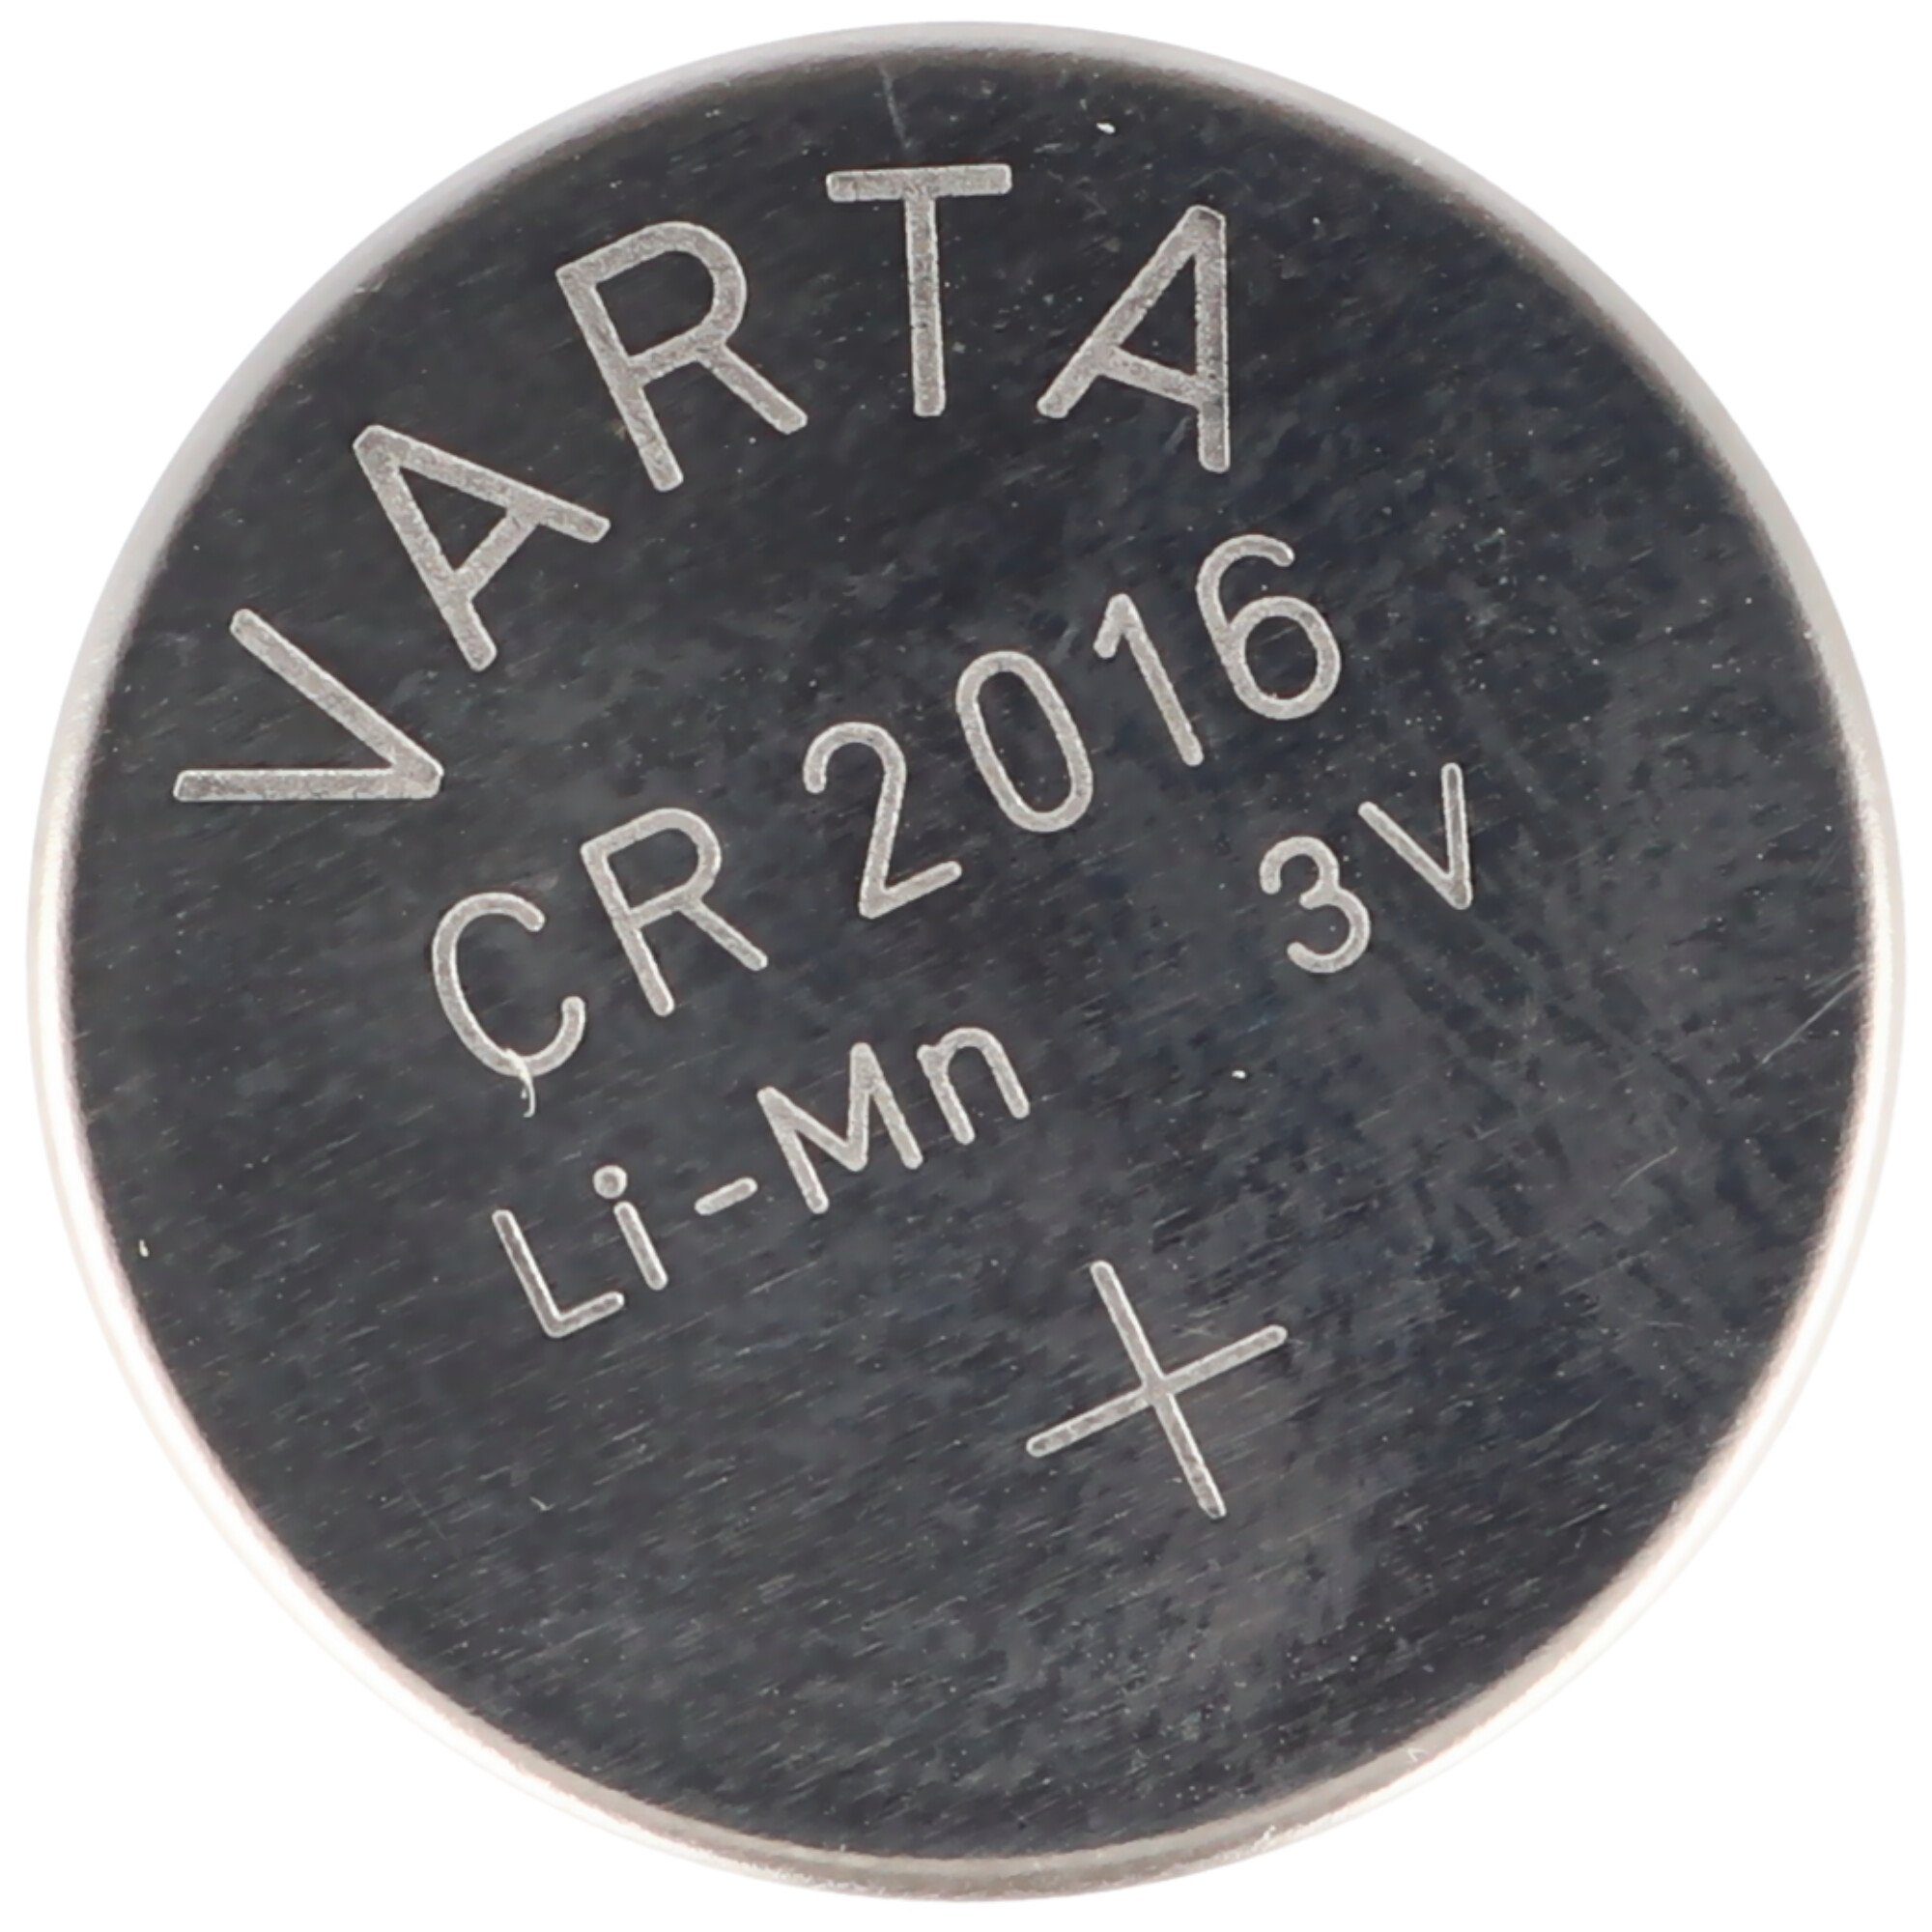 billig verkaufen VARTA Varta CR2016 Lithium Batterie, Batterie V) (3,0